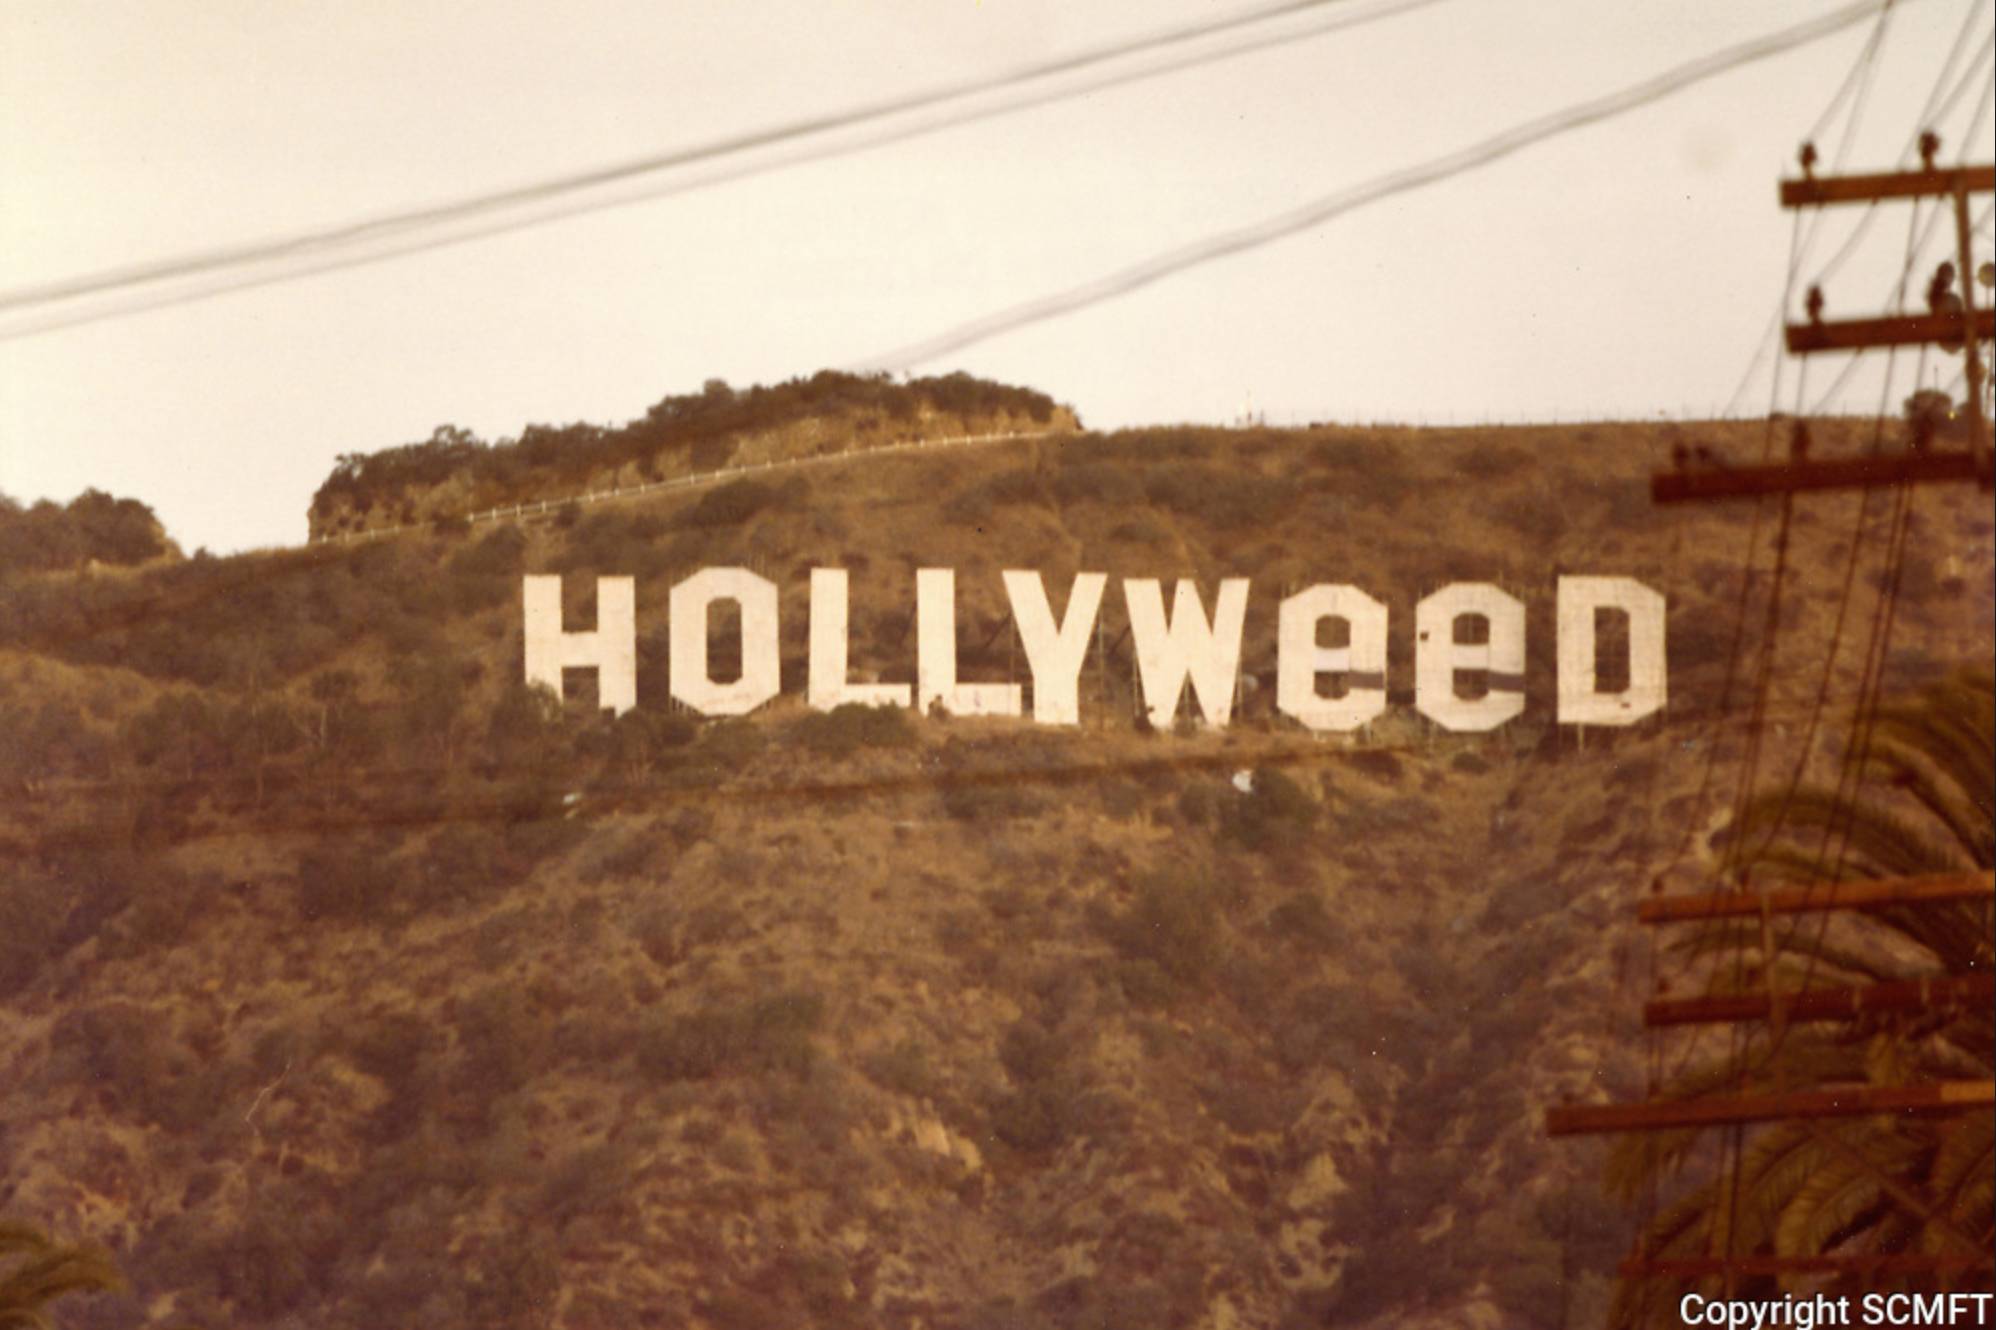 1976. Знак Голливуд изменён на Hollyweed.